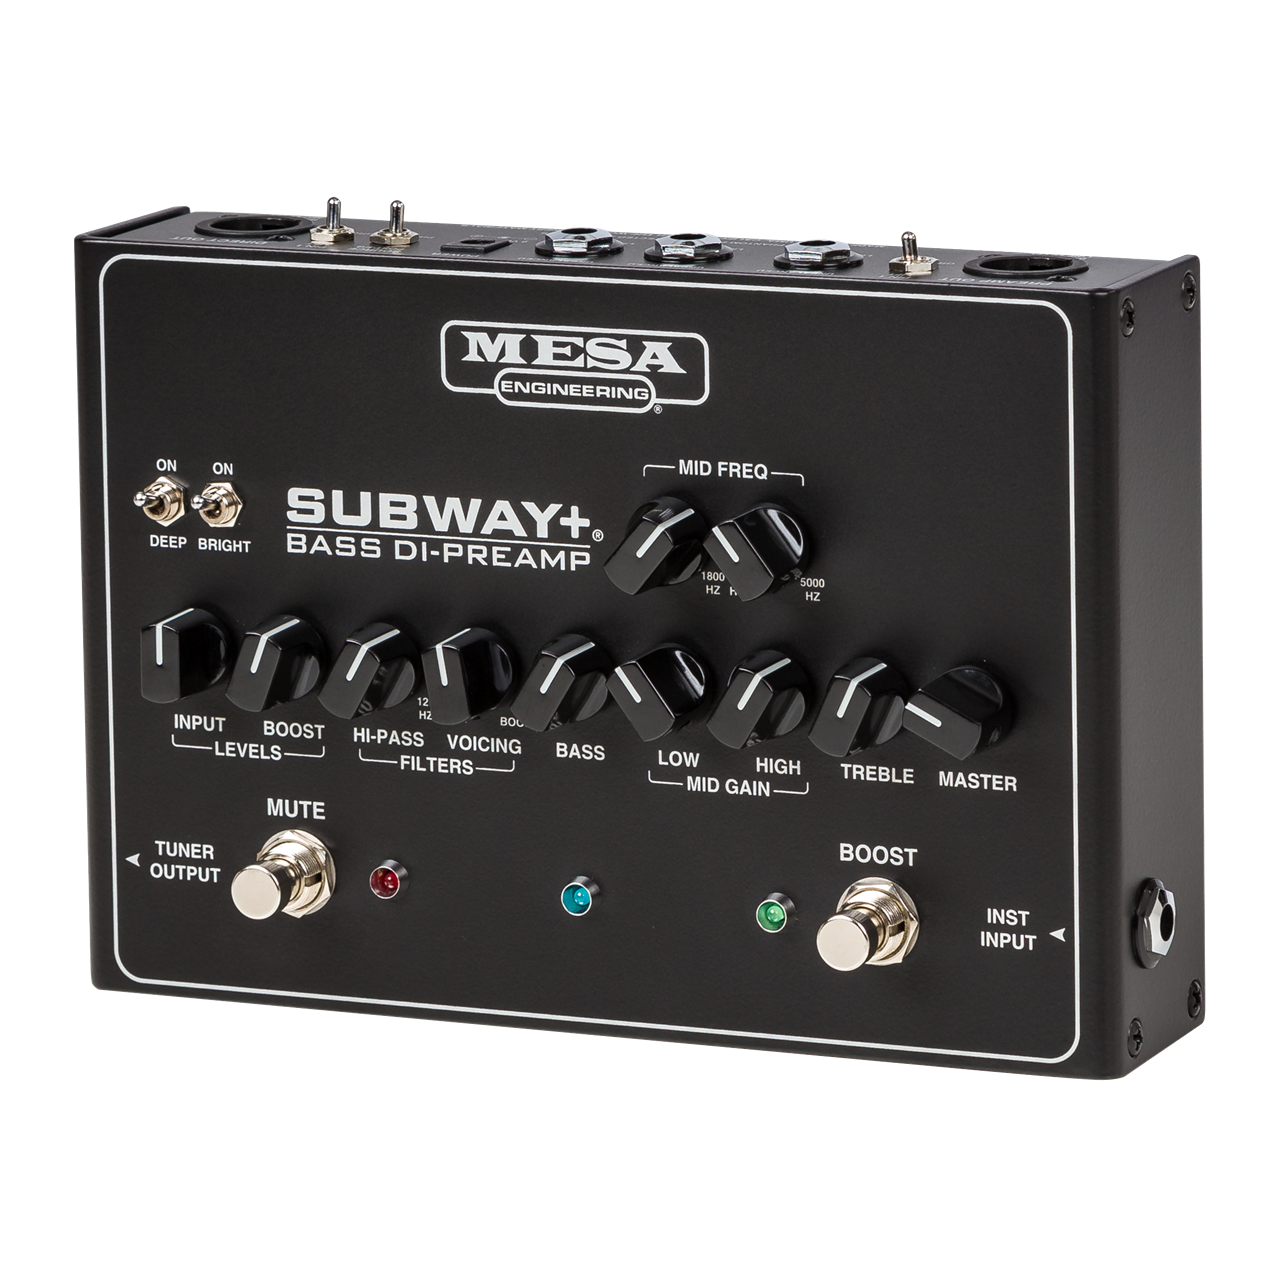 MESA Boogie Subway Bass DI-Preamp DI800+